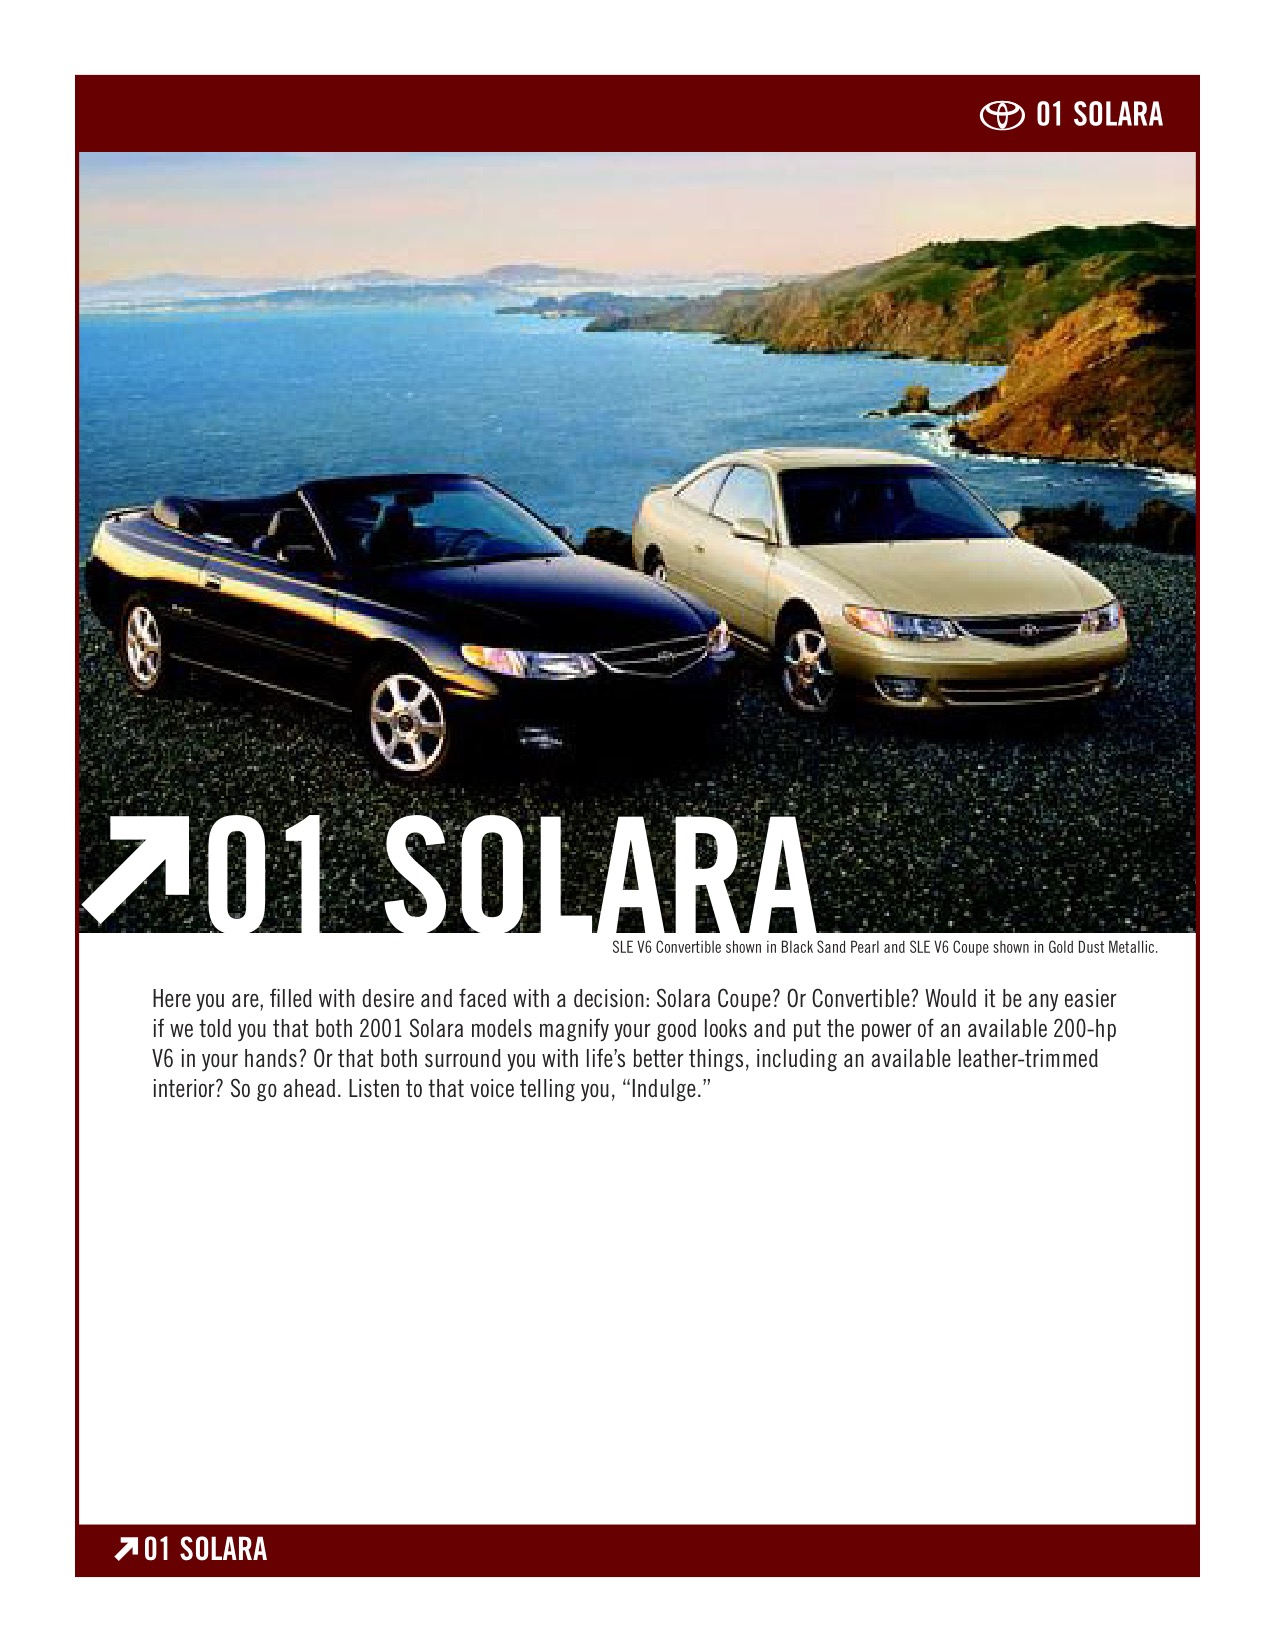 2001 Toyota Solara Brochure